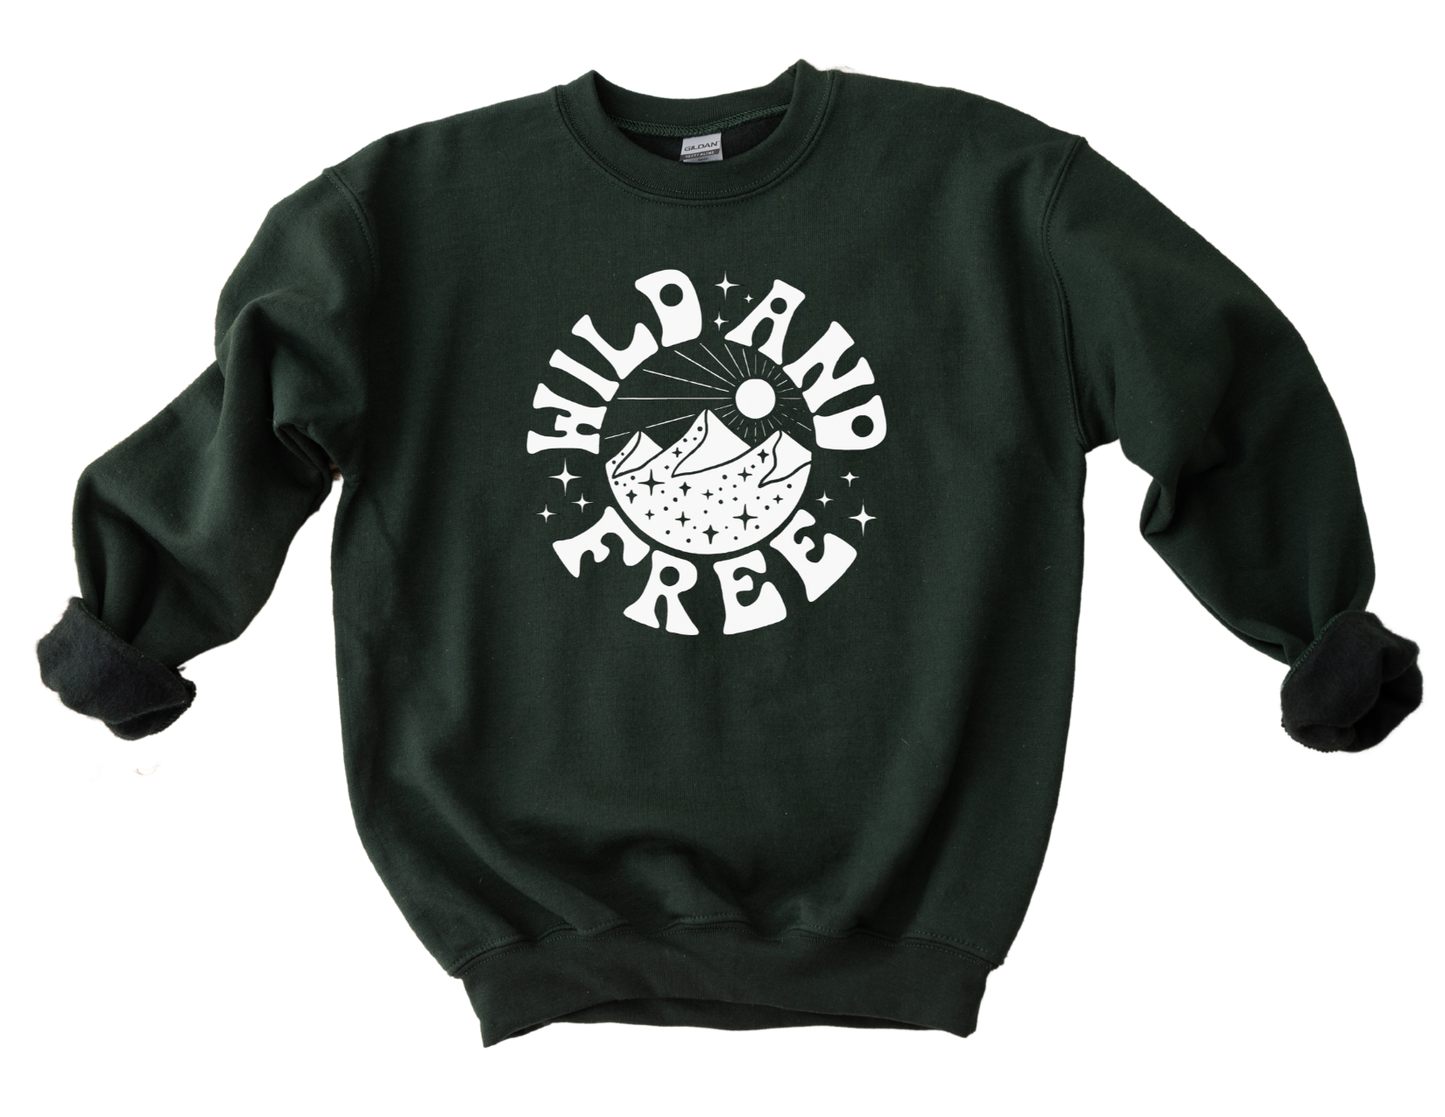 Wild and Free Sweatshirt